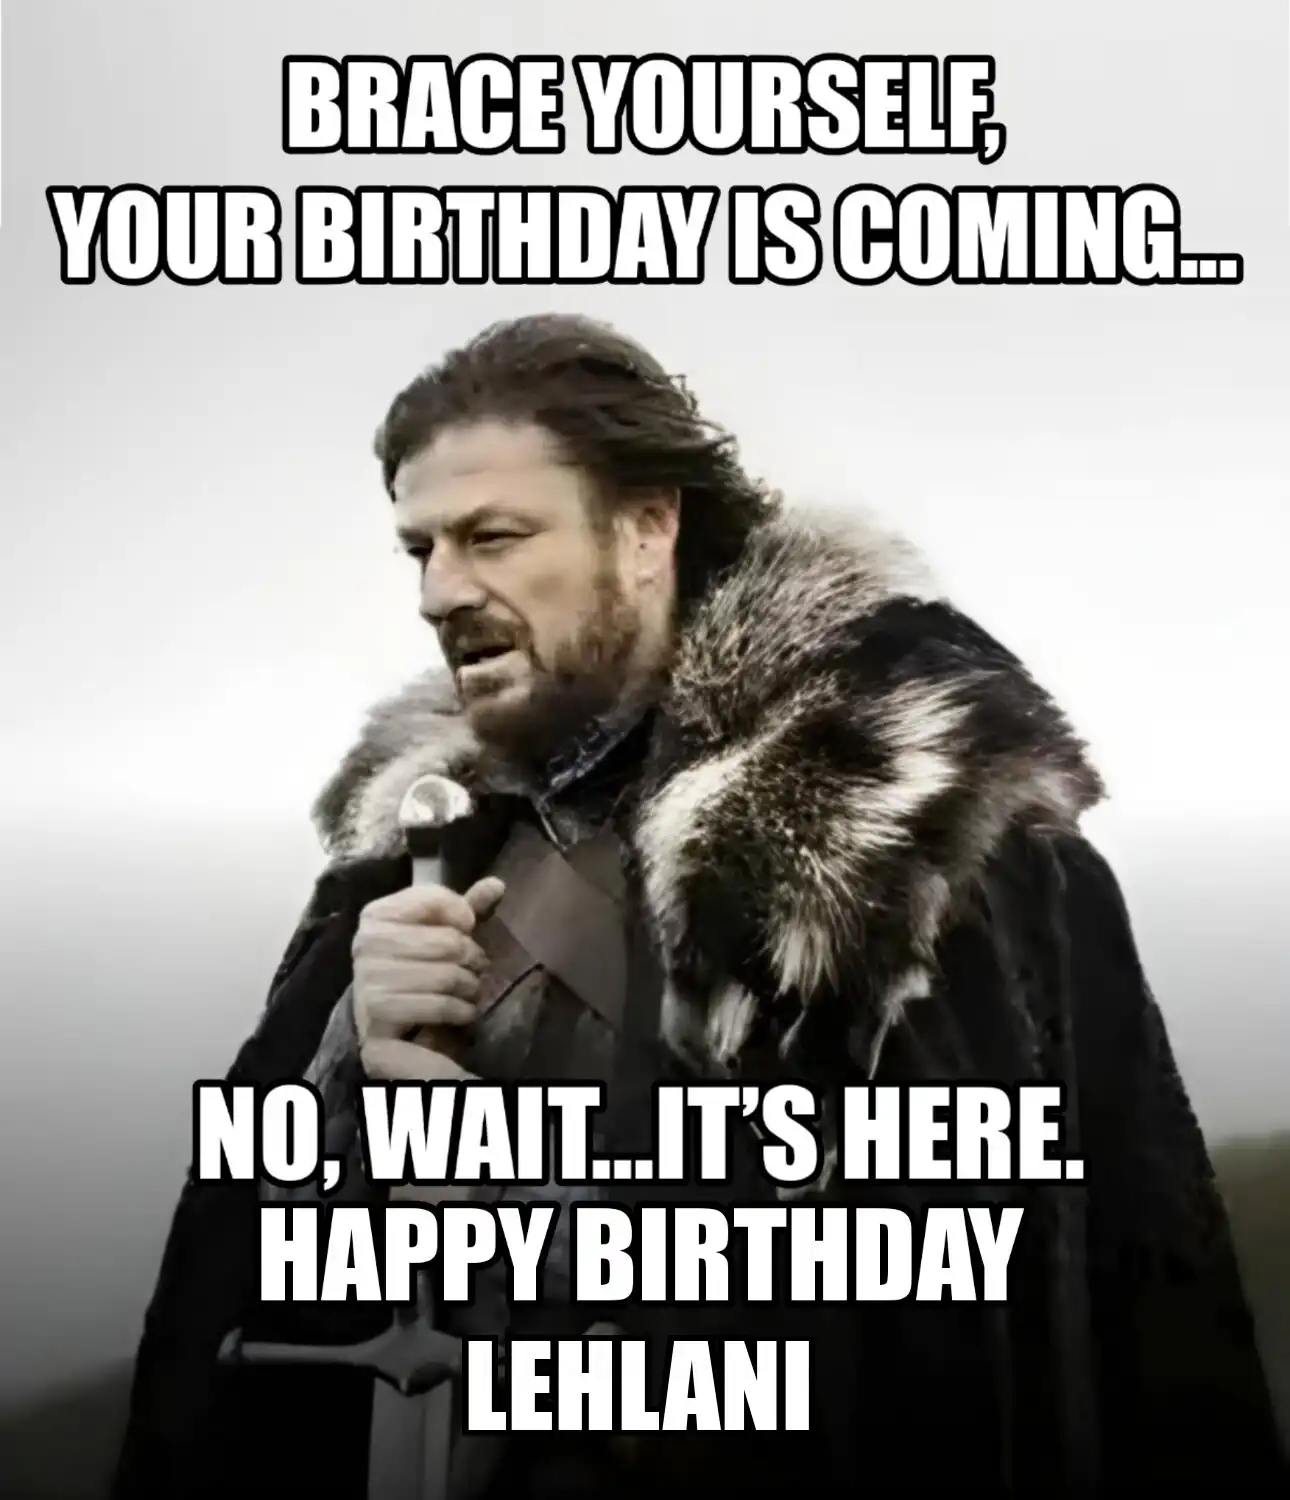 Happy Birthday Lehlani Brace Yourself Your Birthday Is Coming Meme